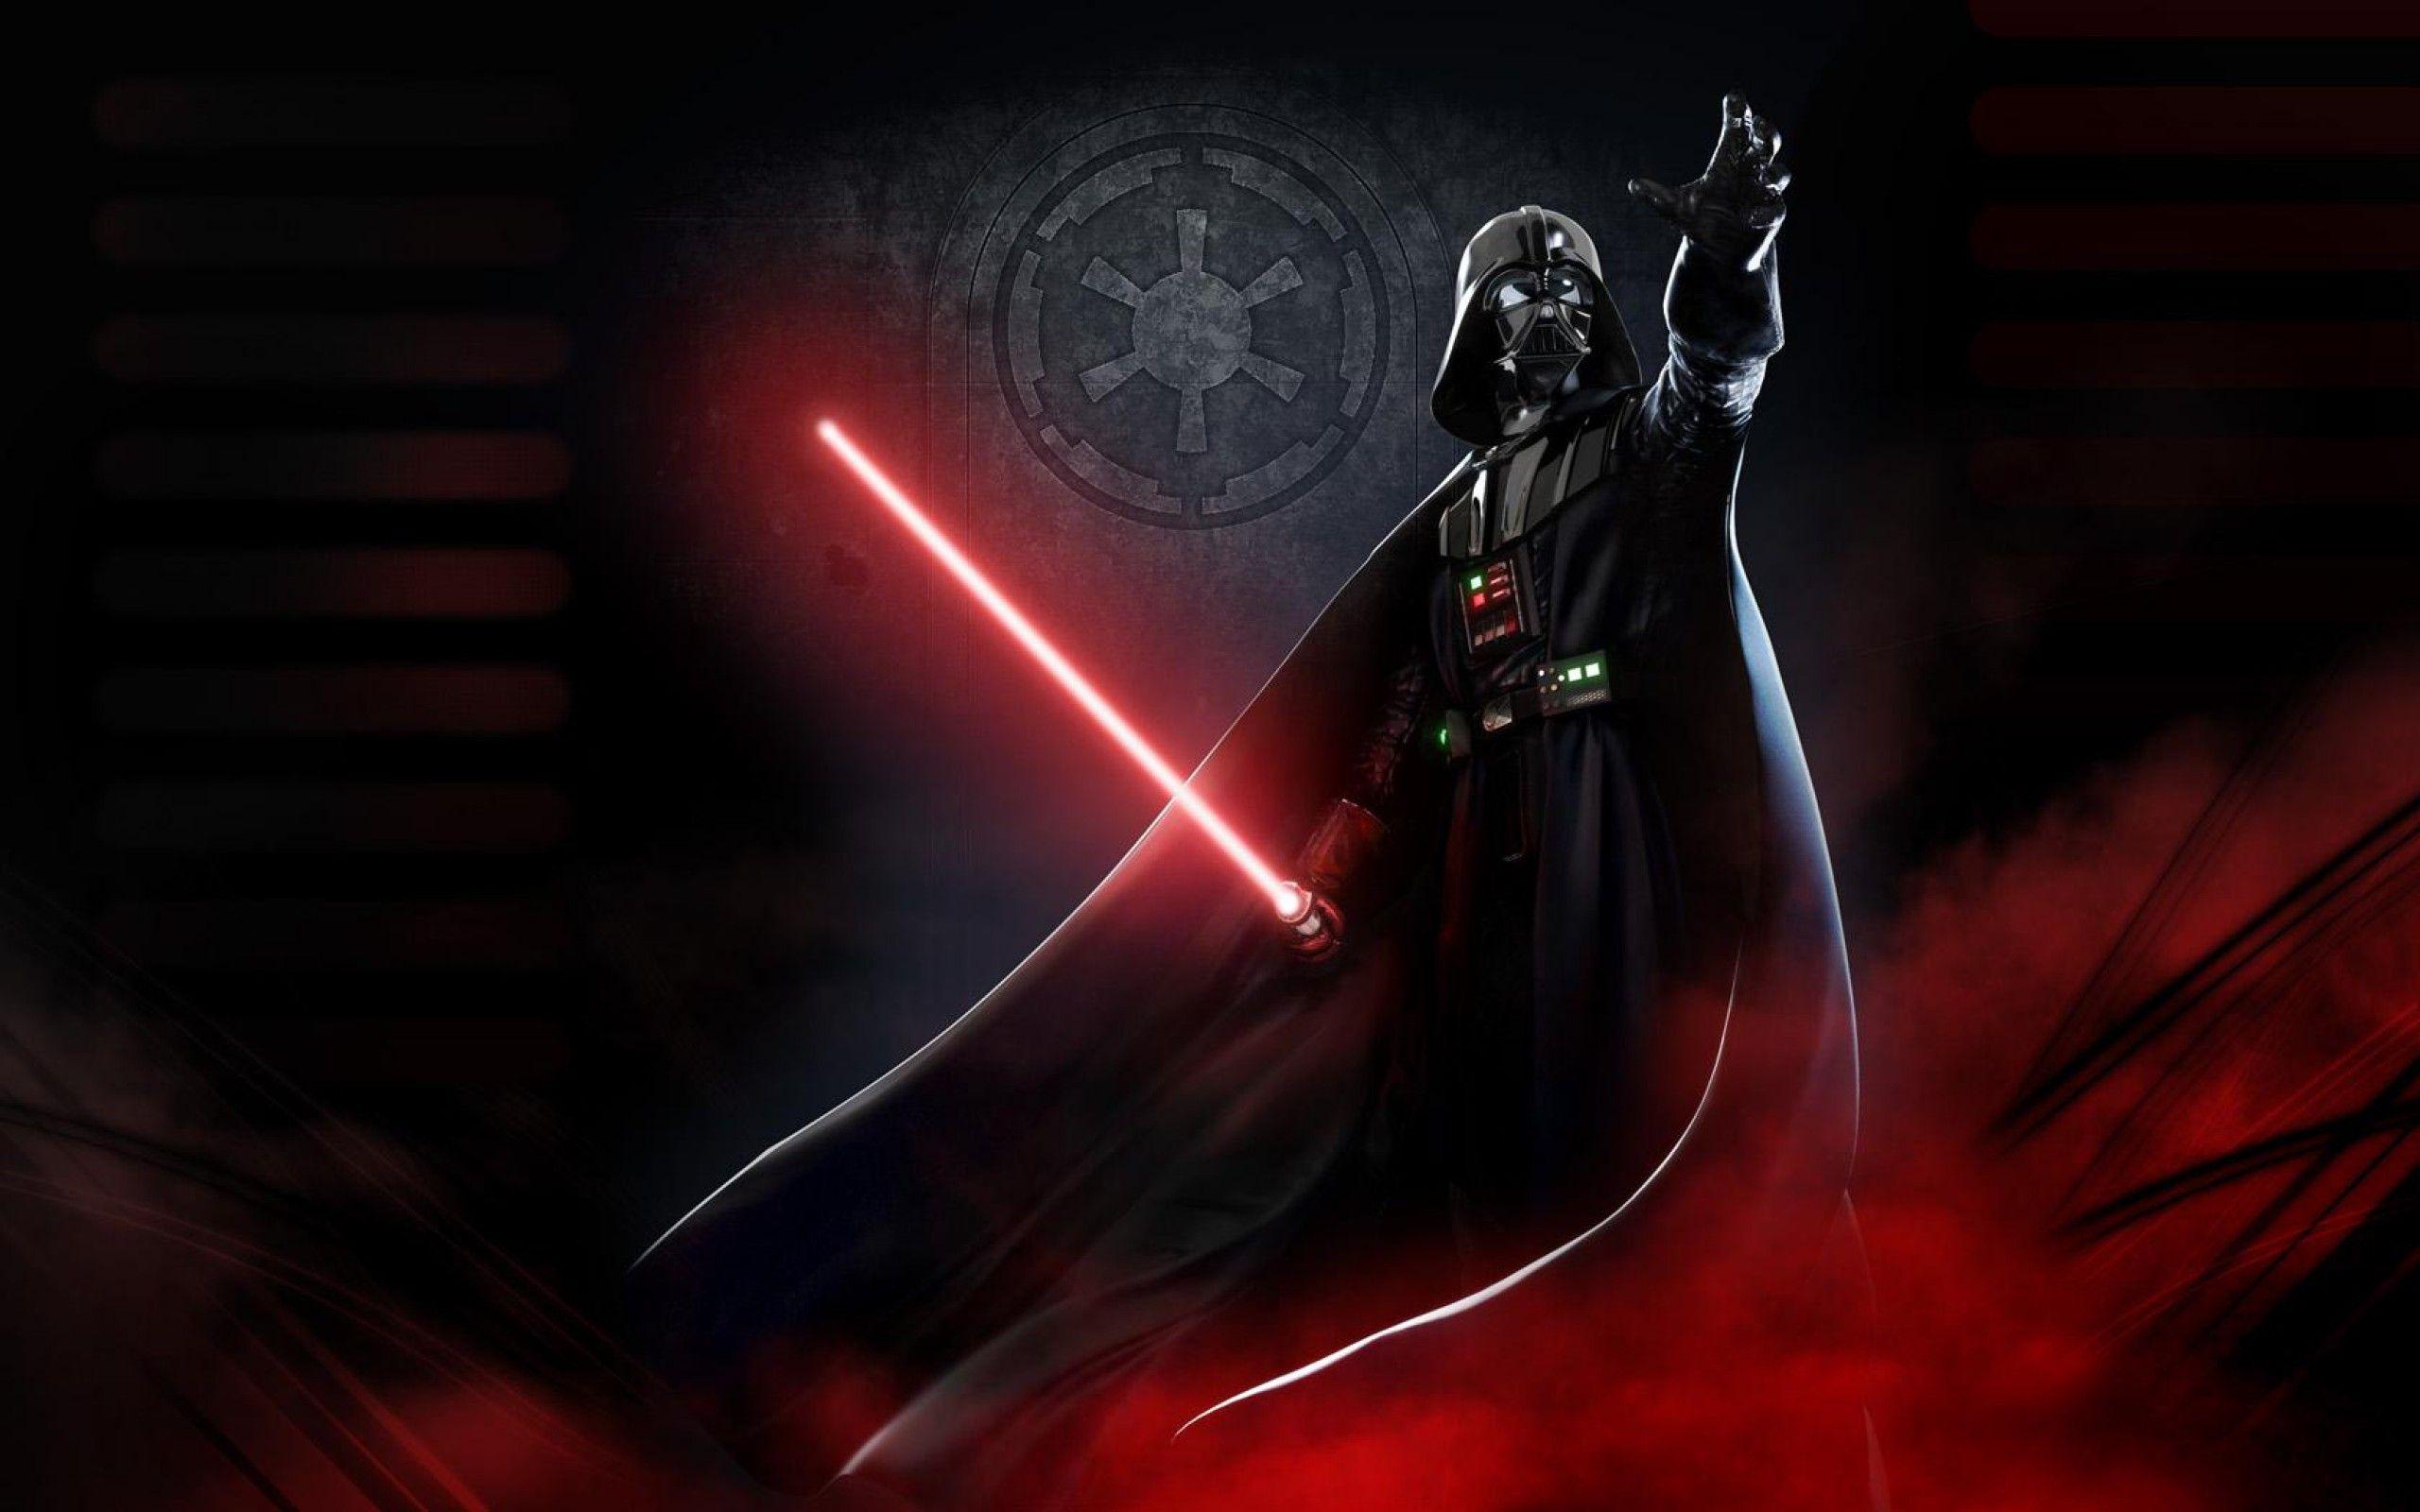 Star Wars Darth Vader Wallpaper HD Image For iPhone Desktop